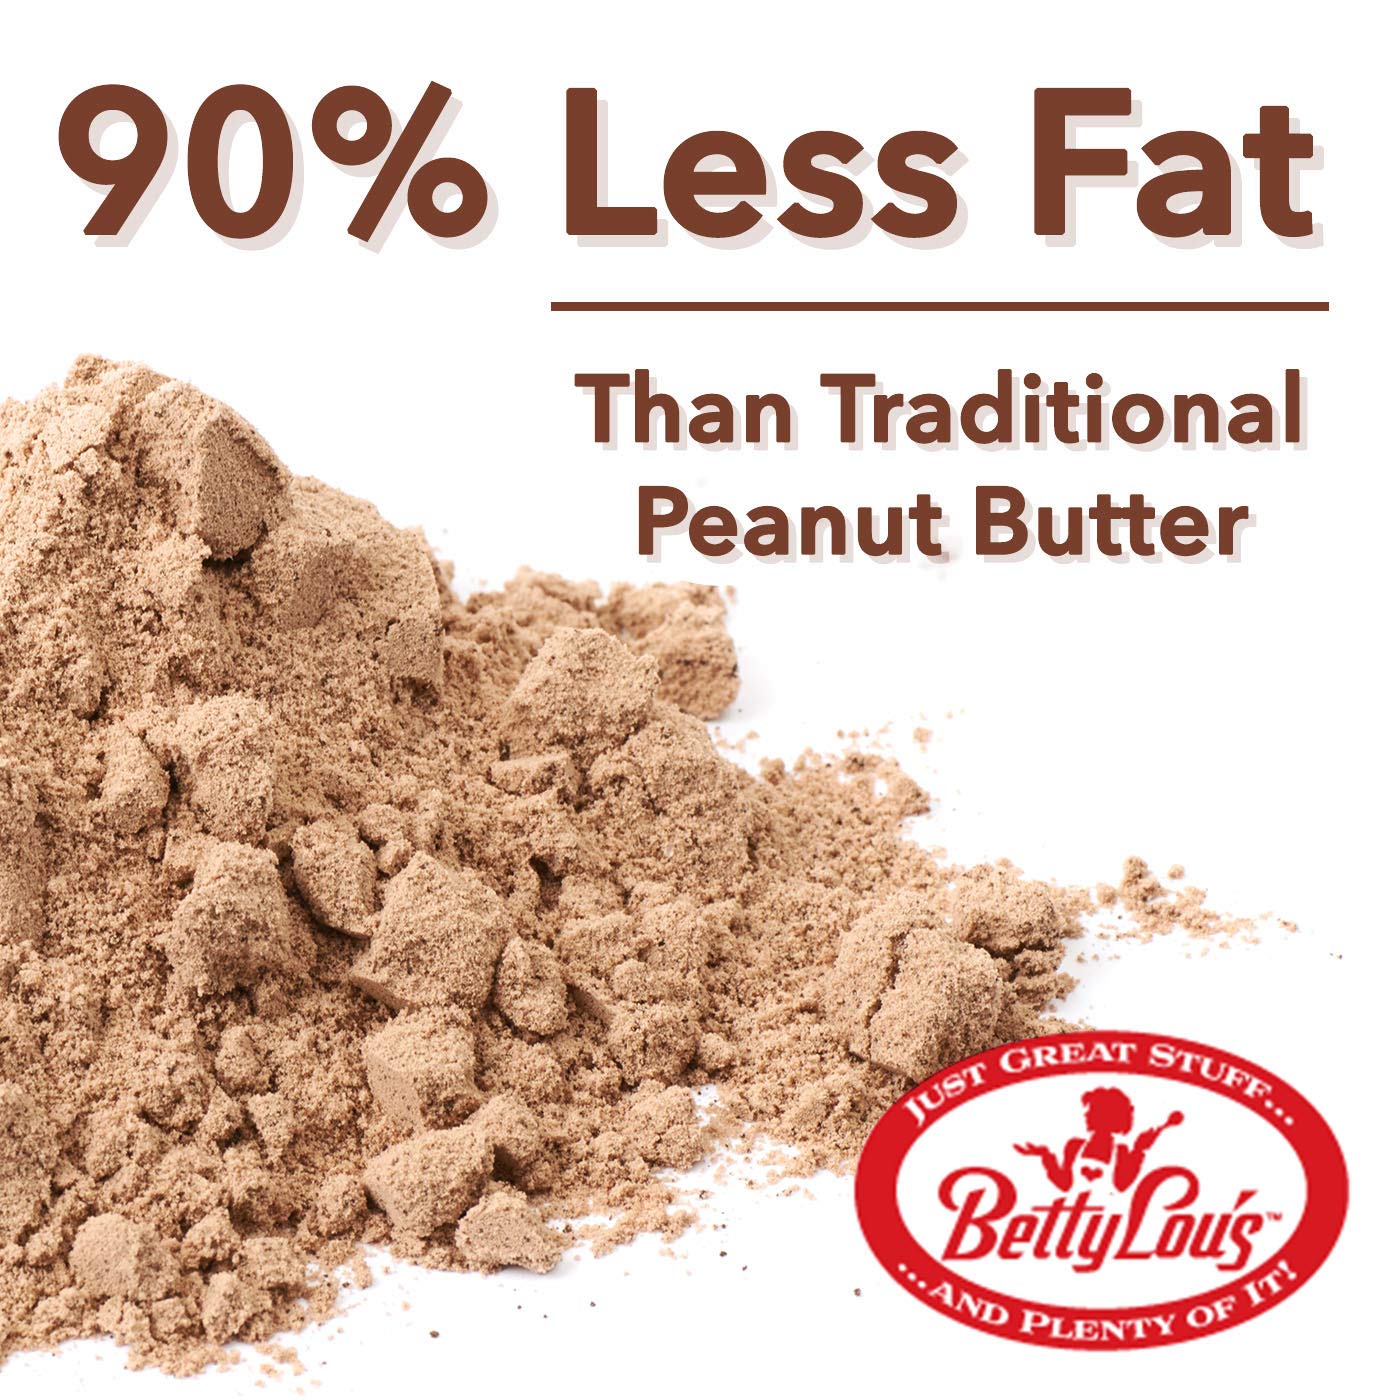 90% less fat